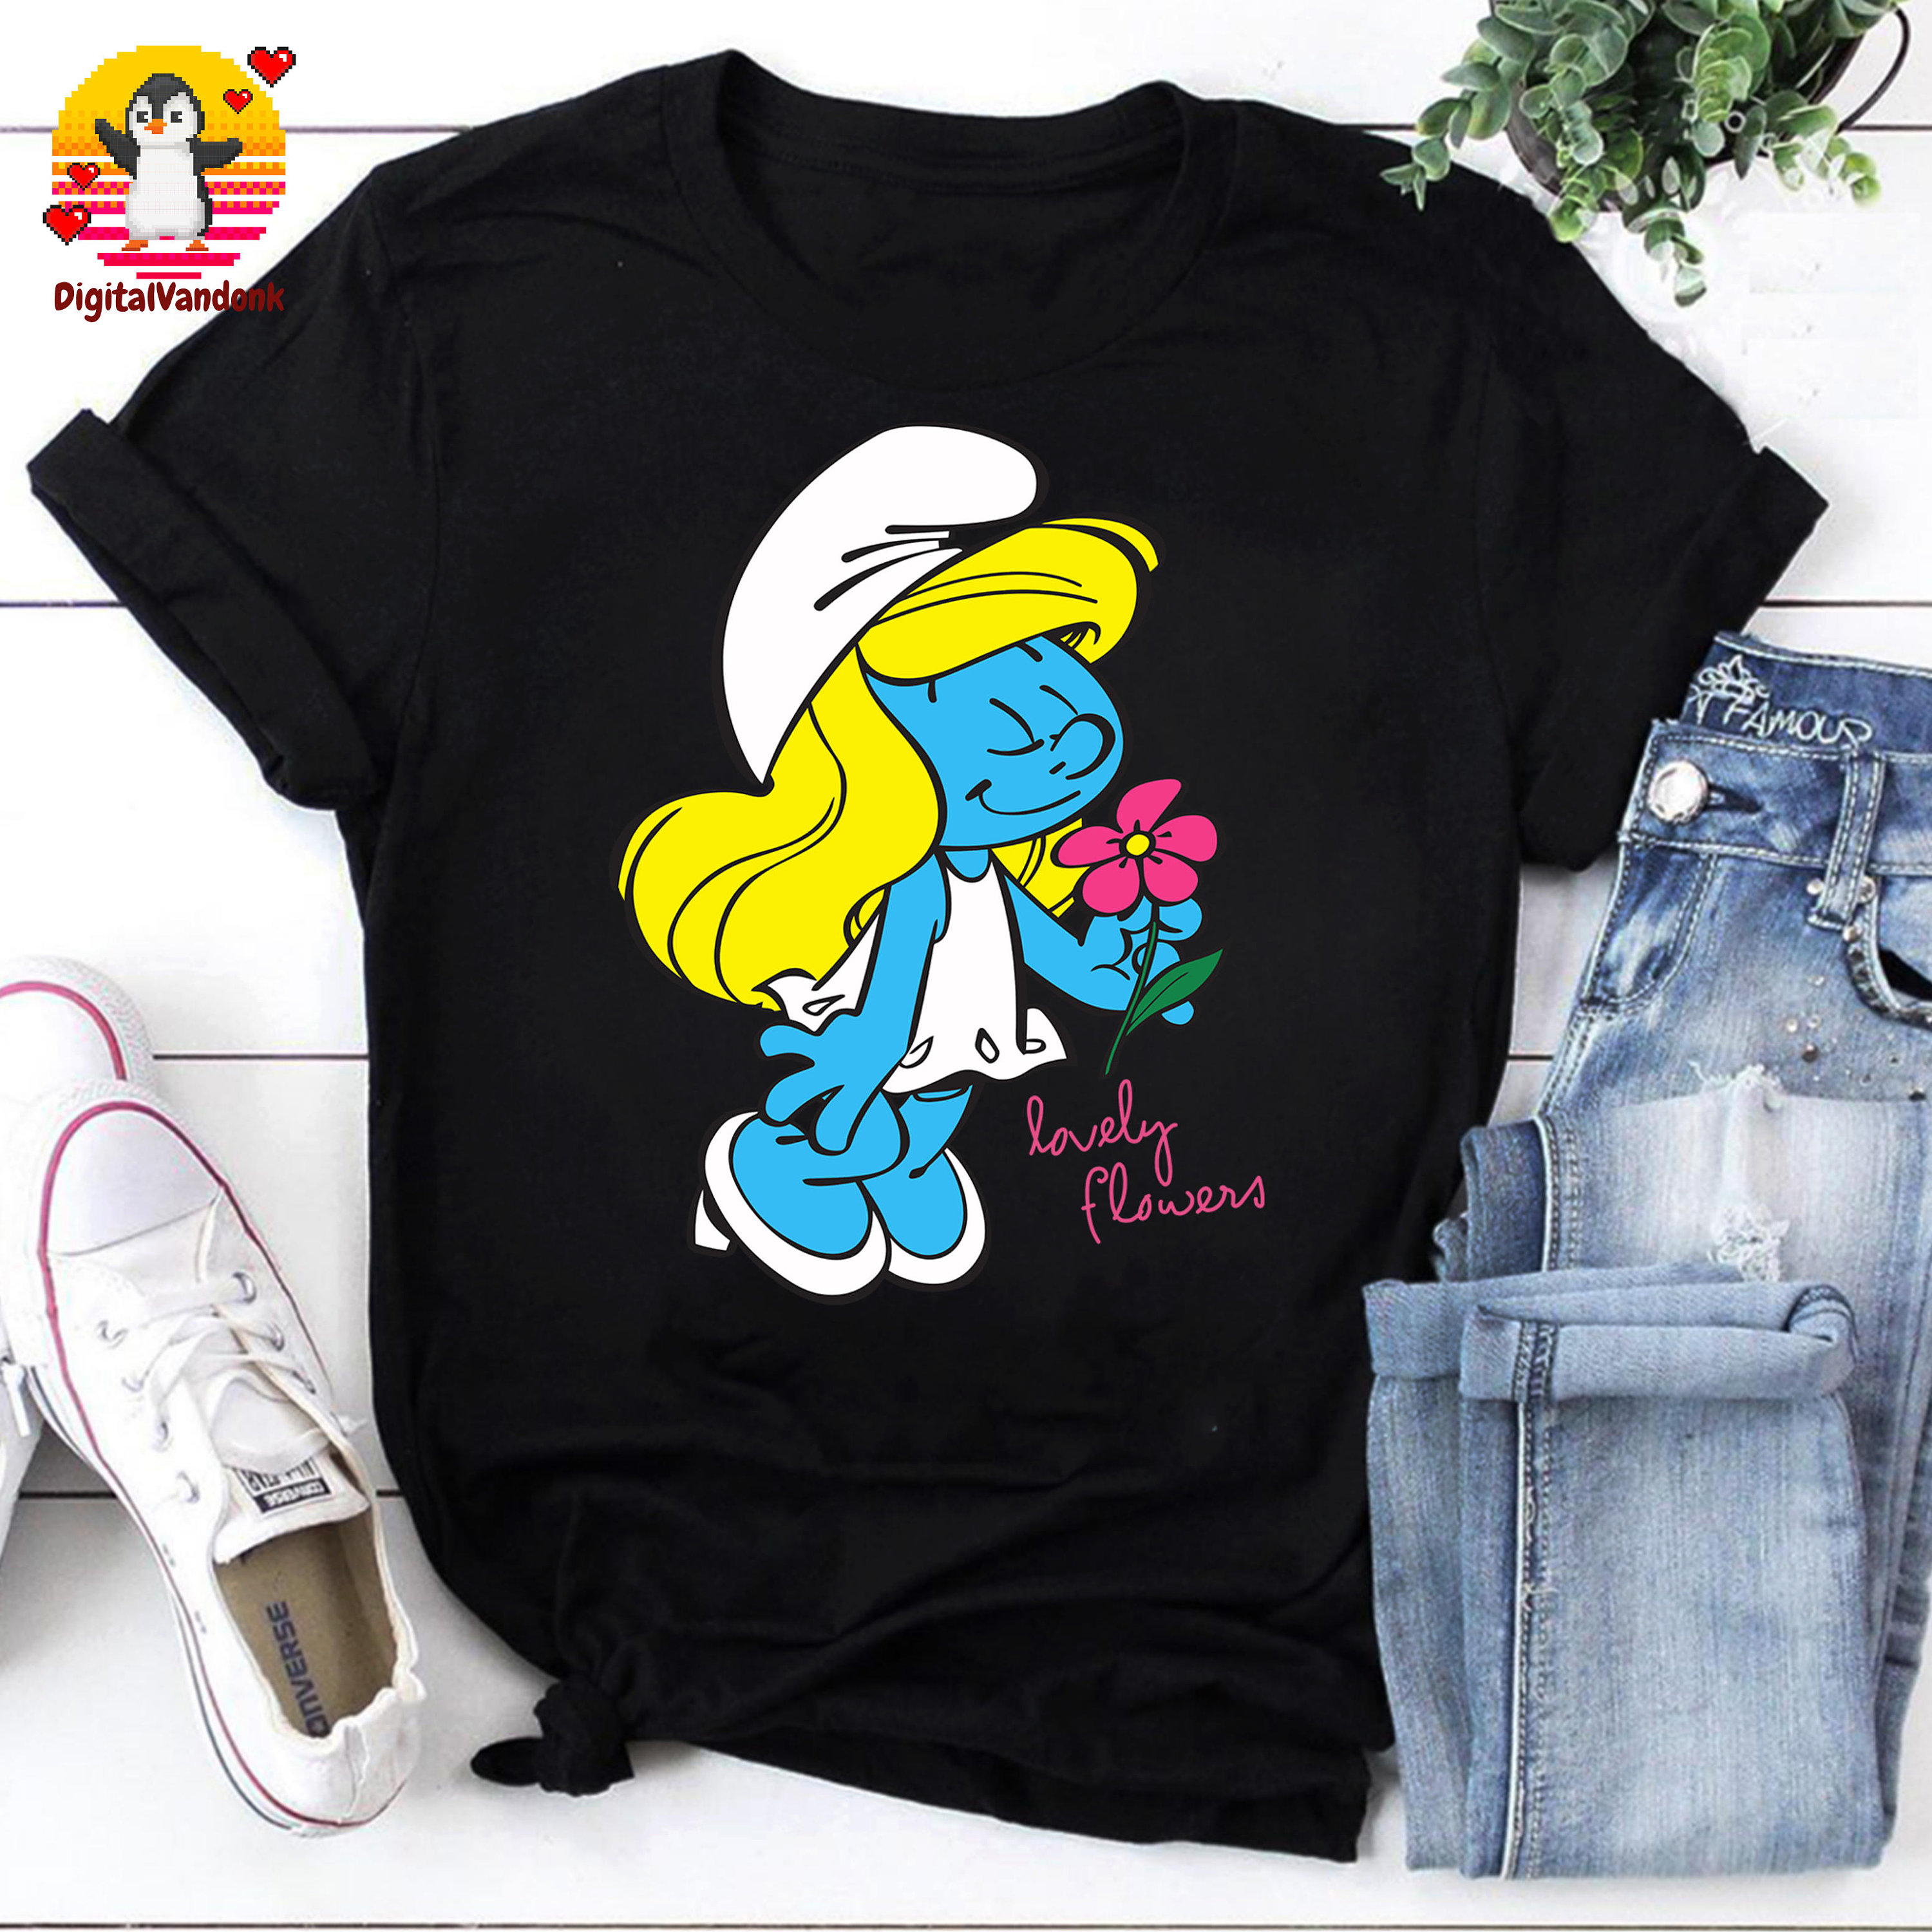 Meditation Smurf cartoon design cup sleeve with Color changing 16oz pl –  Soul Flower Custom Gifts